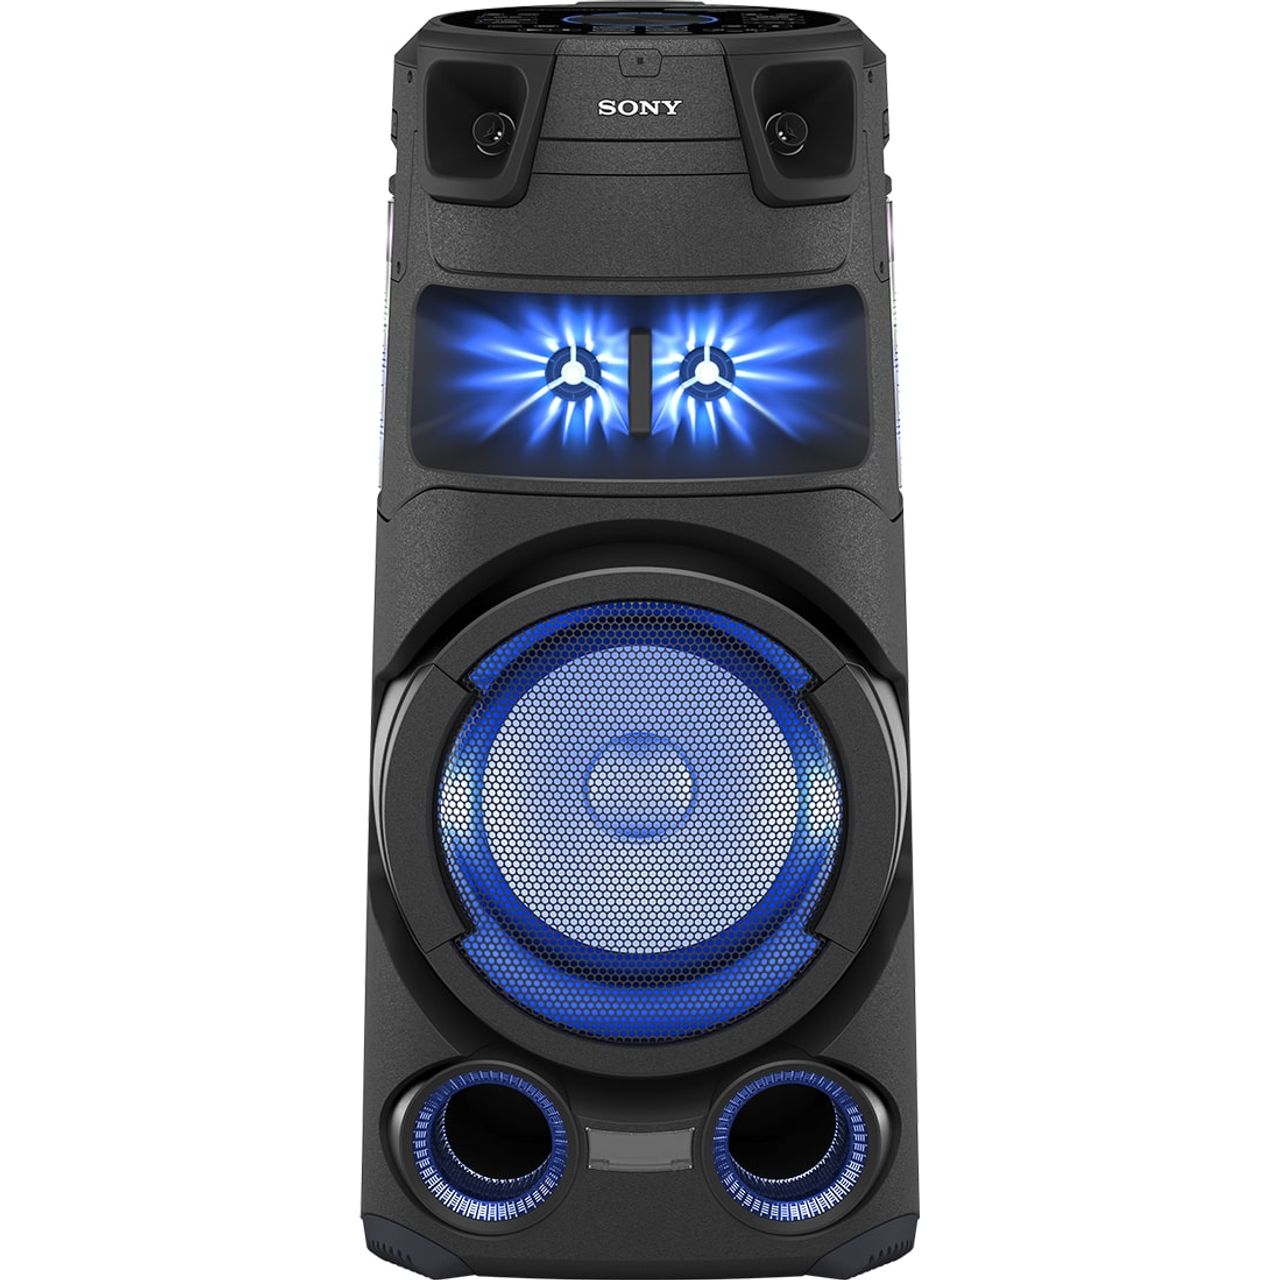 125 - Party Black Sony MHC-V73D Watt Speaker